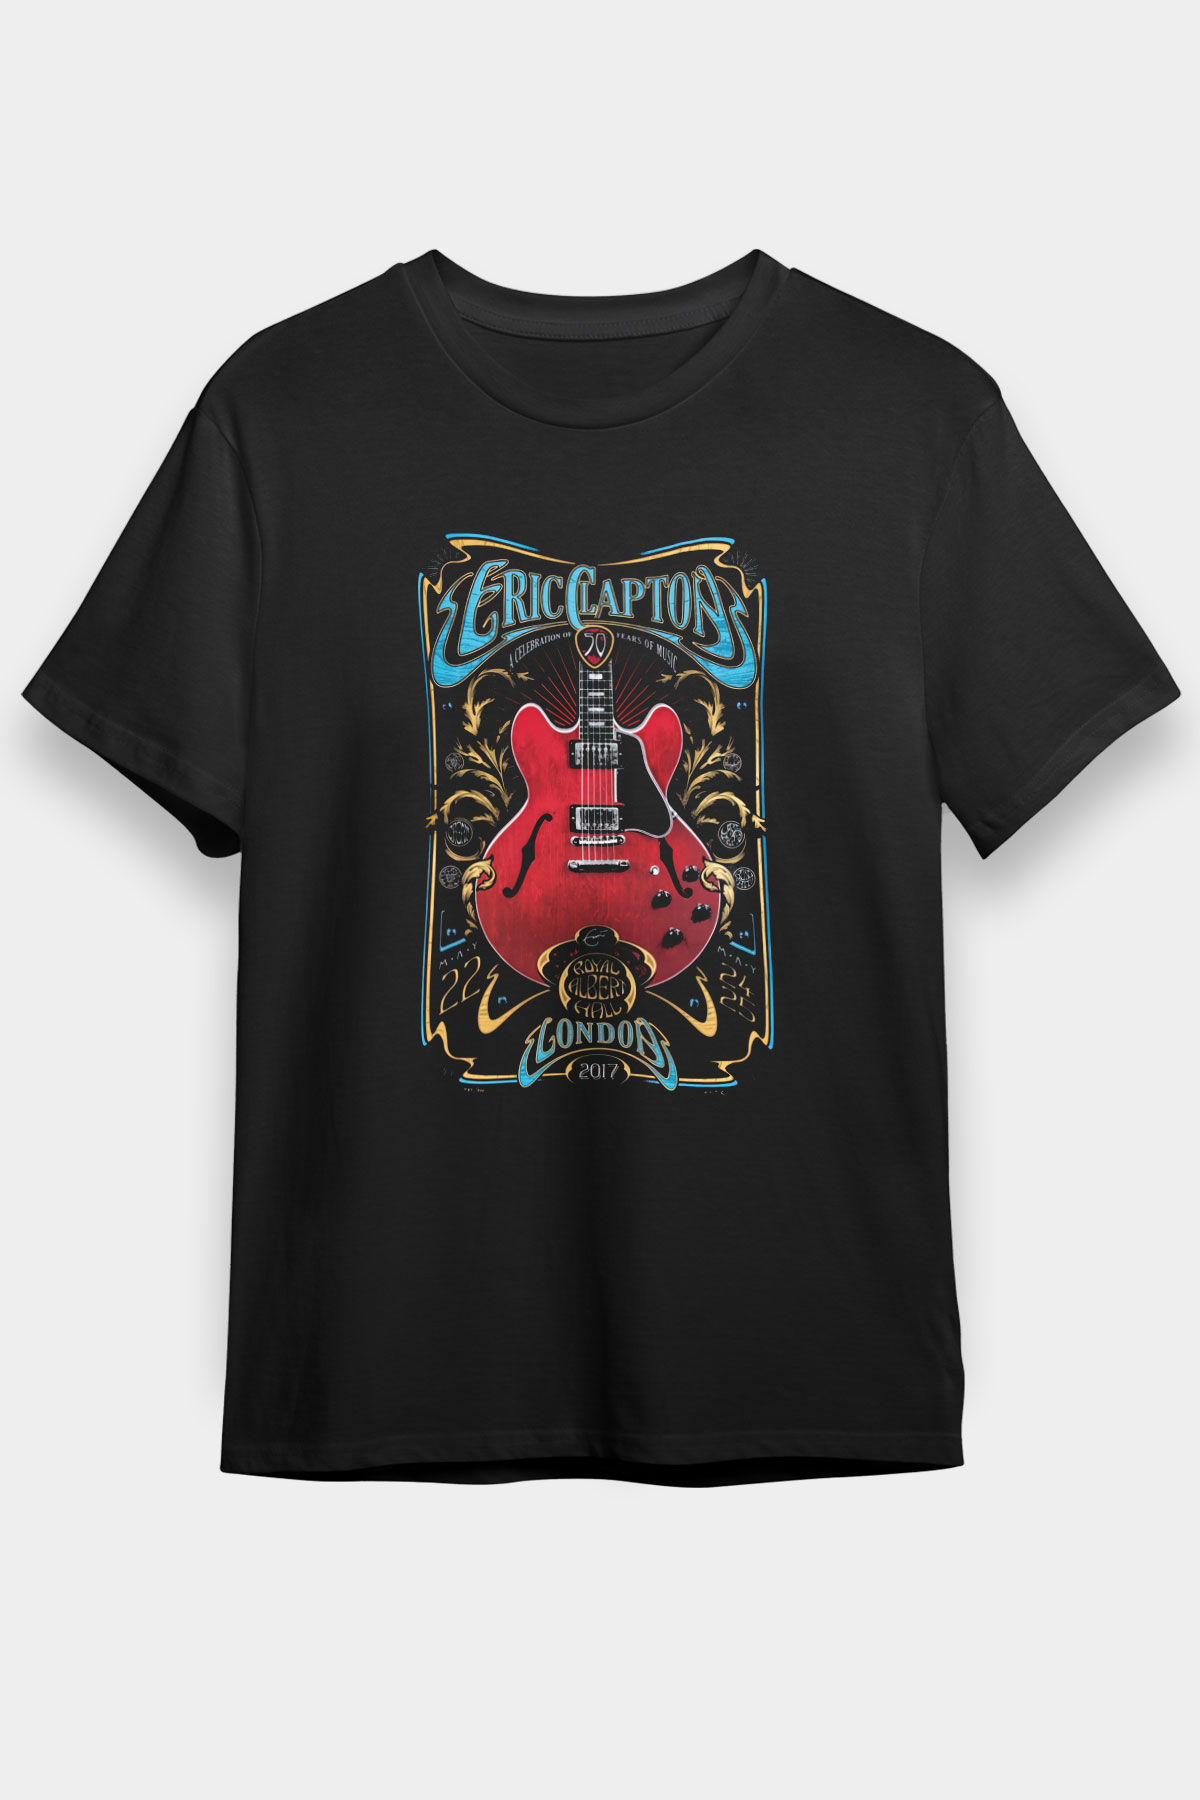 Eric Clapton T shirt, Music Band Tshirt   17/